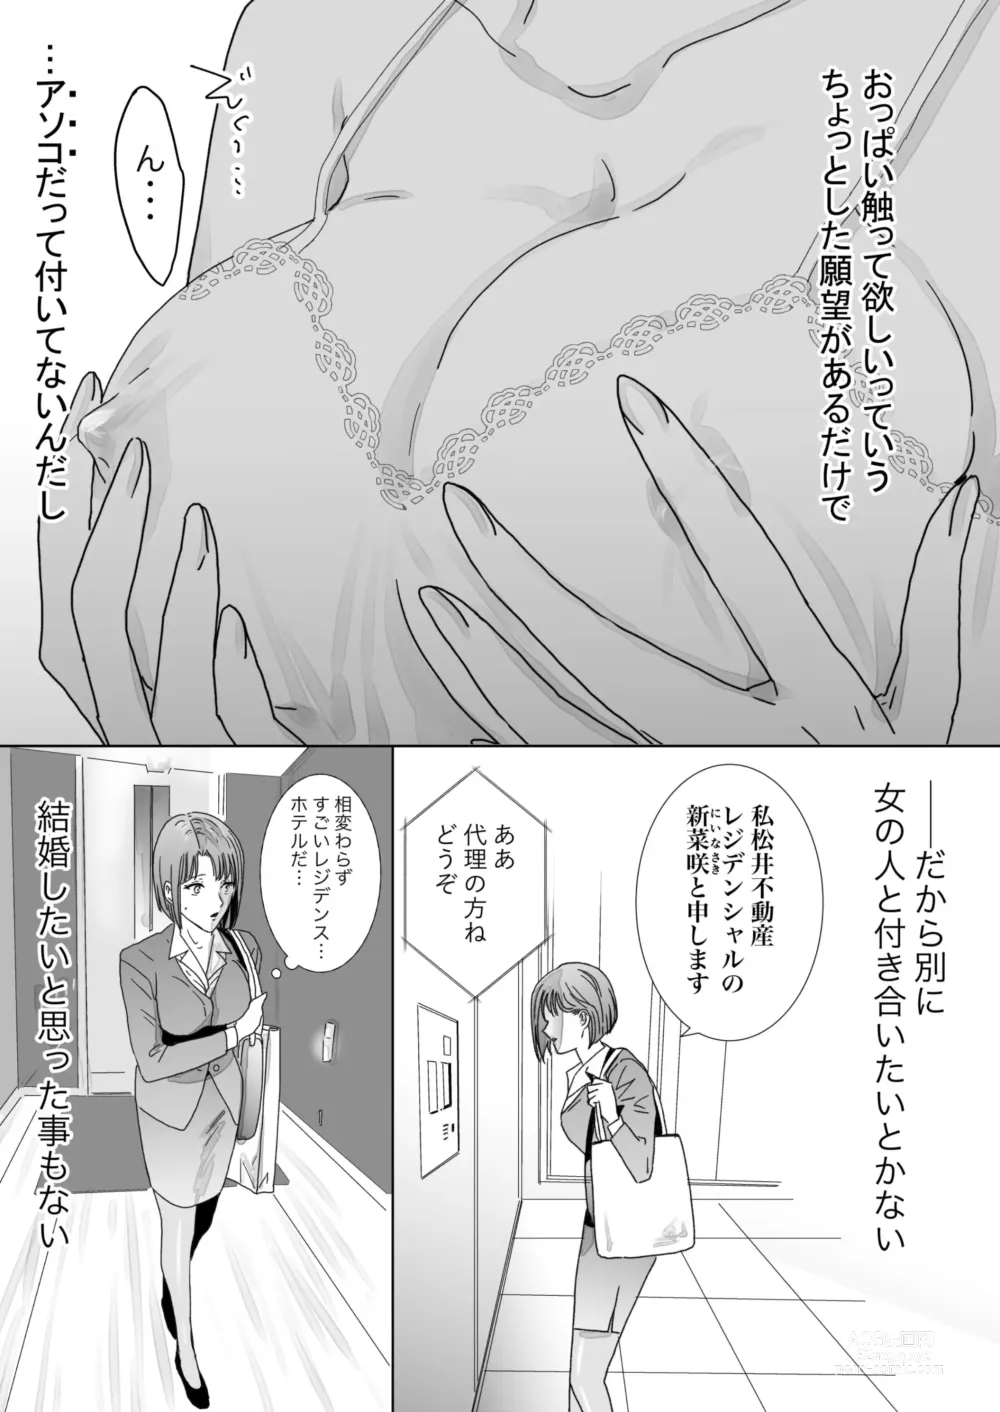 Page 9 of doujinshi Nonke Onna, Lesbian Hitozuma ni NTR masu.